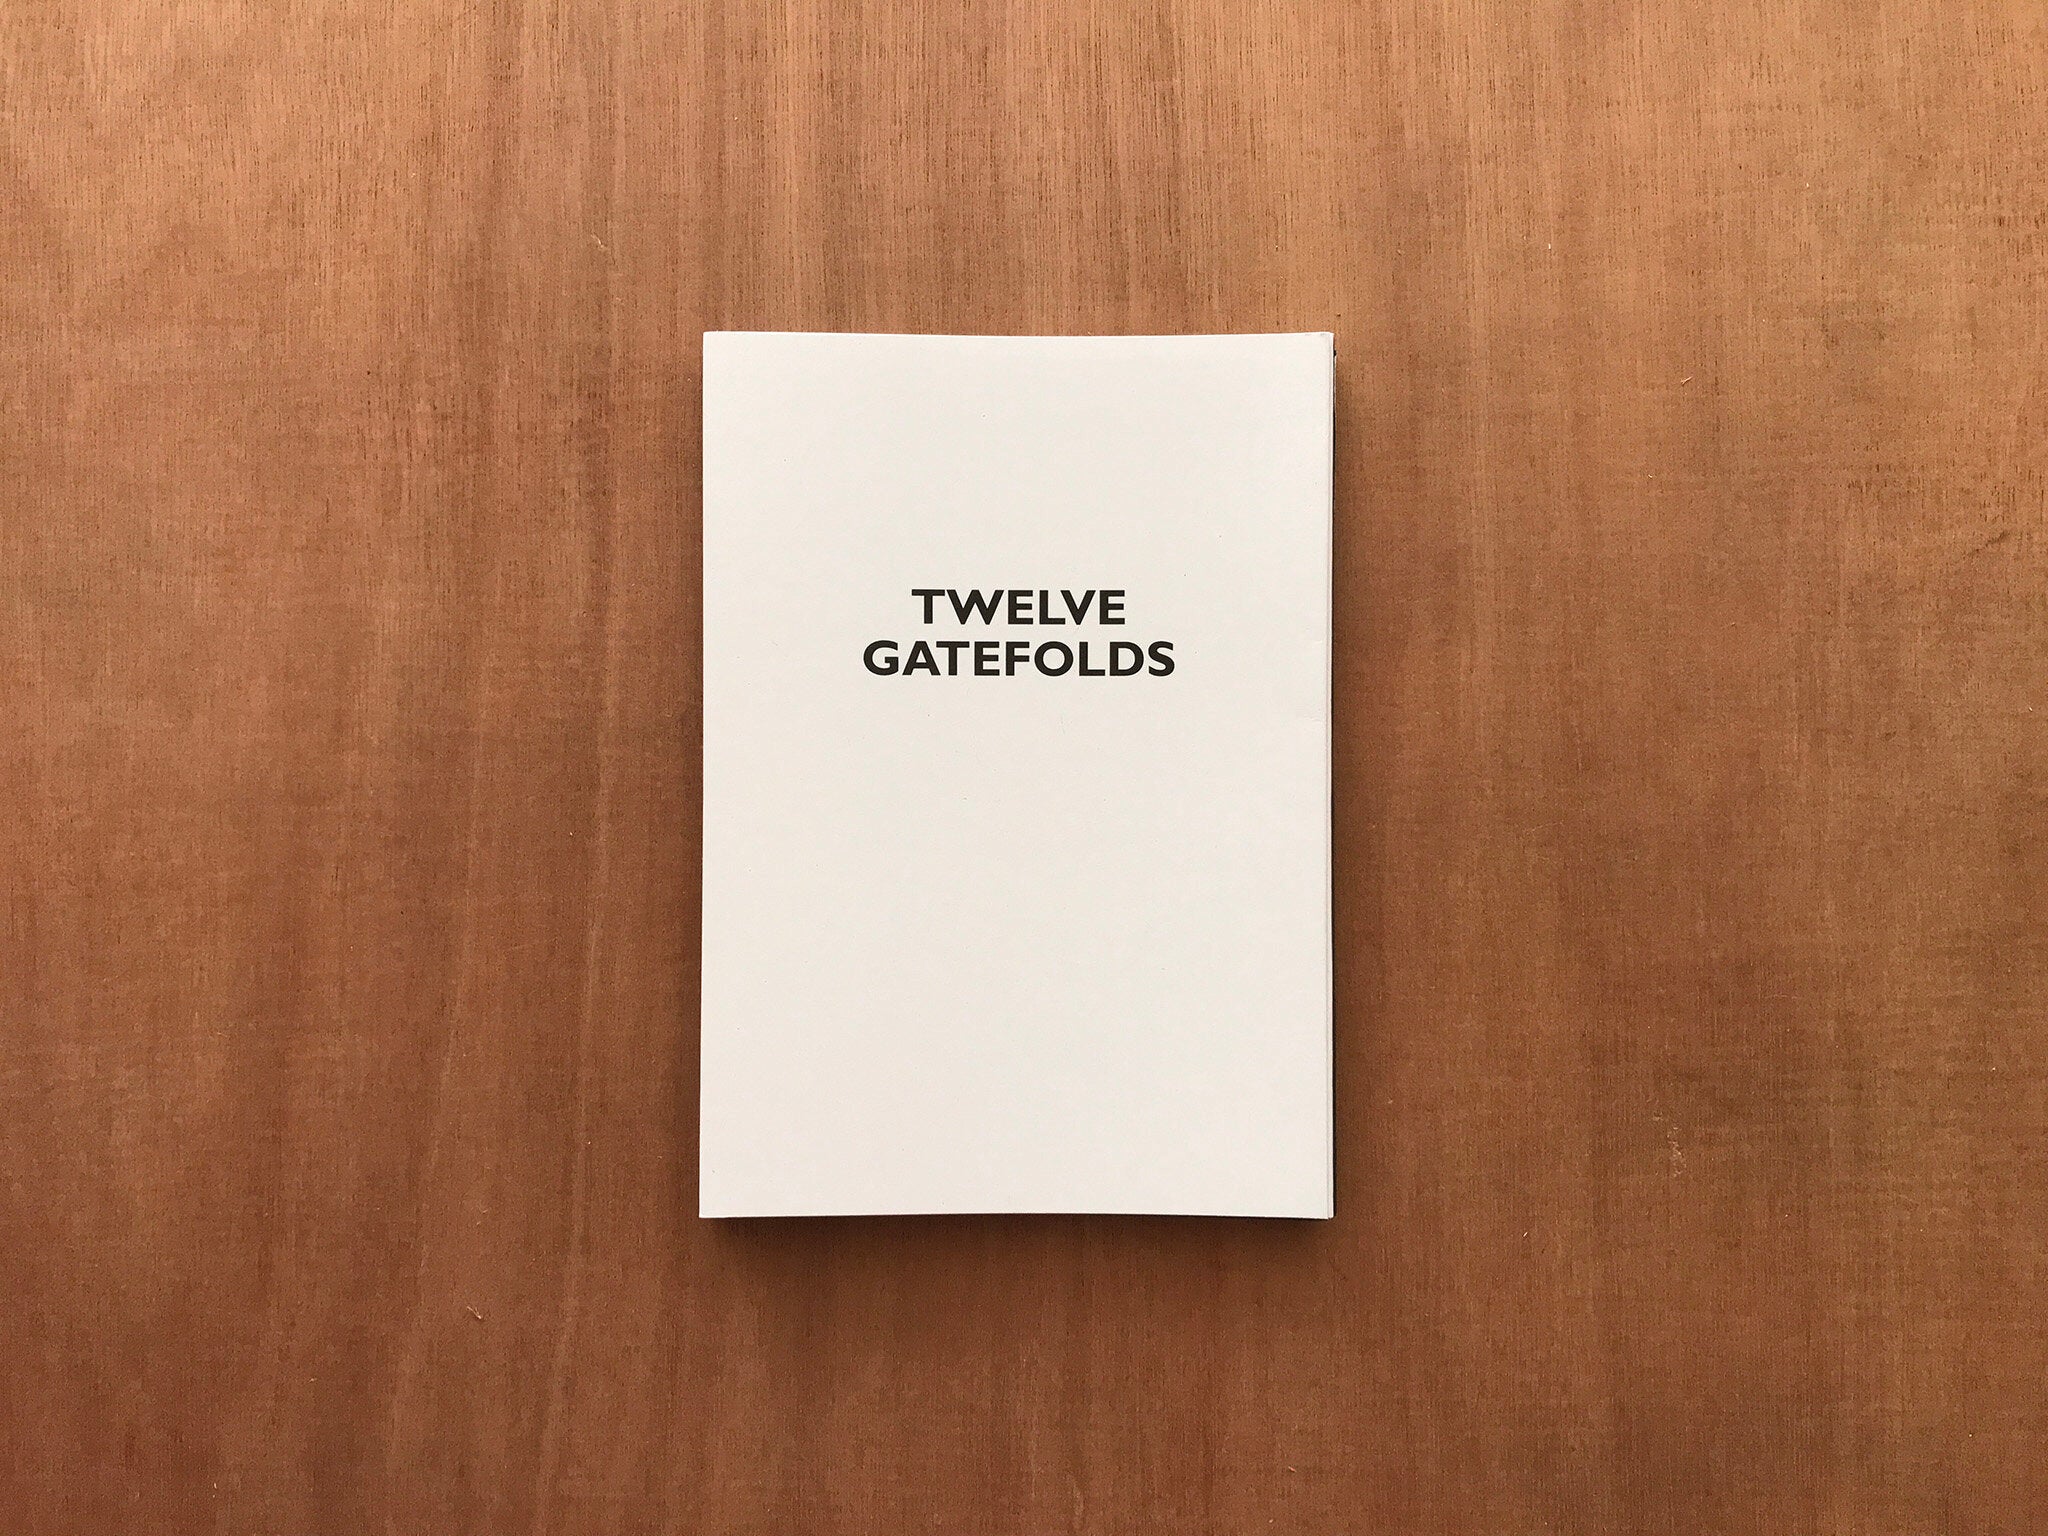 TWELVE GATEFOLDS by Joe Devlin